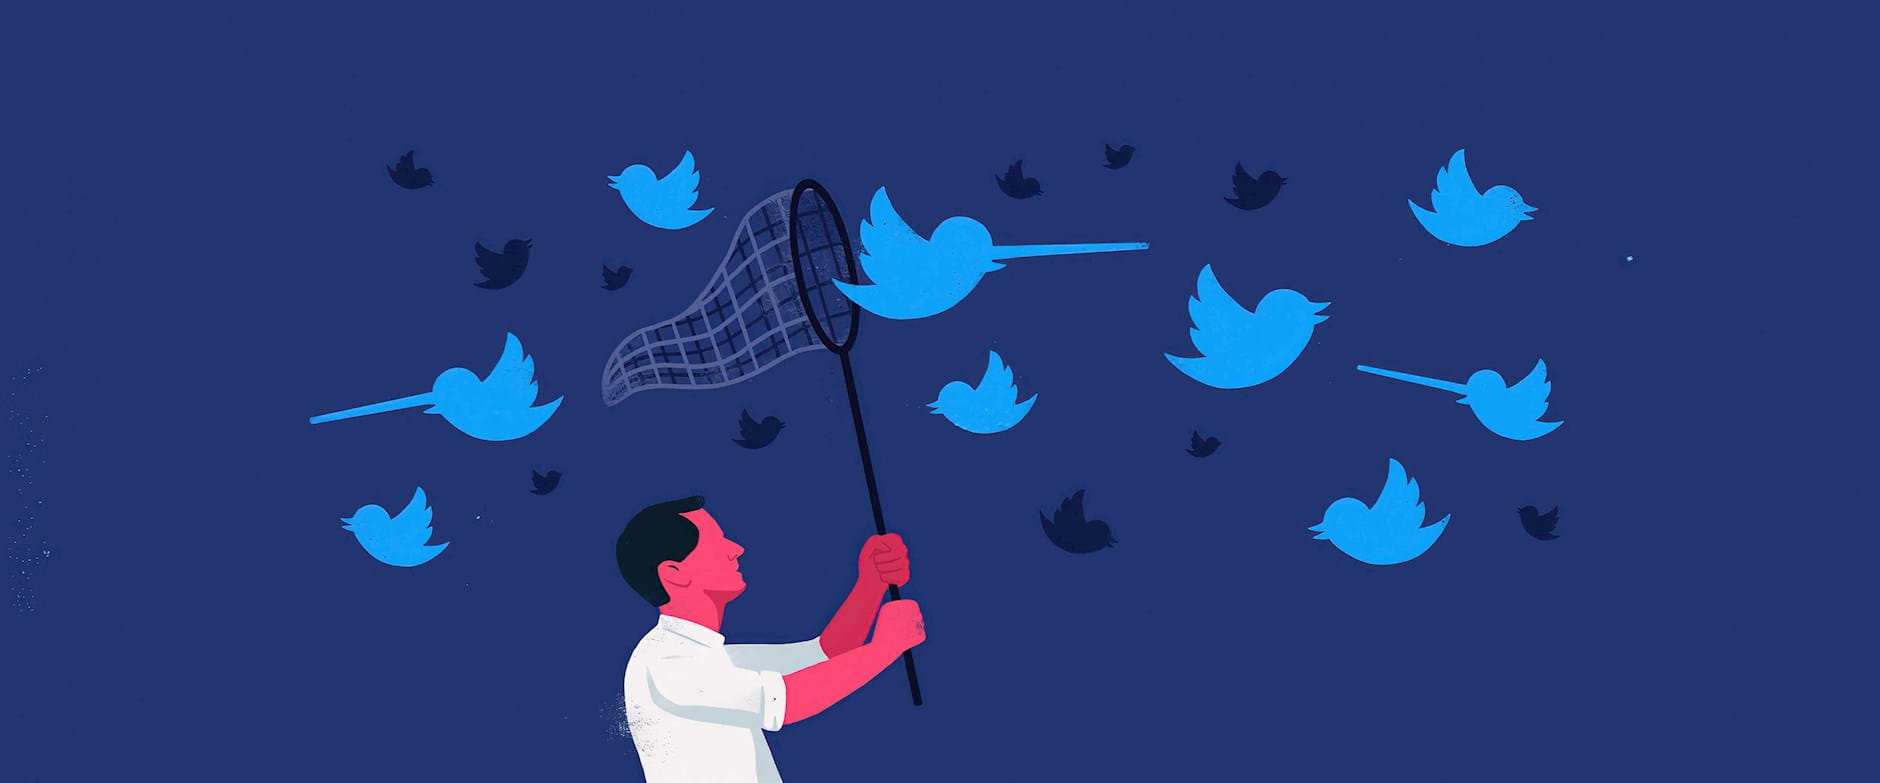 Man trying to net Twitter birds